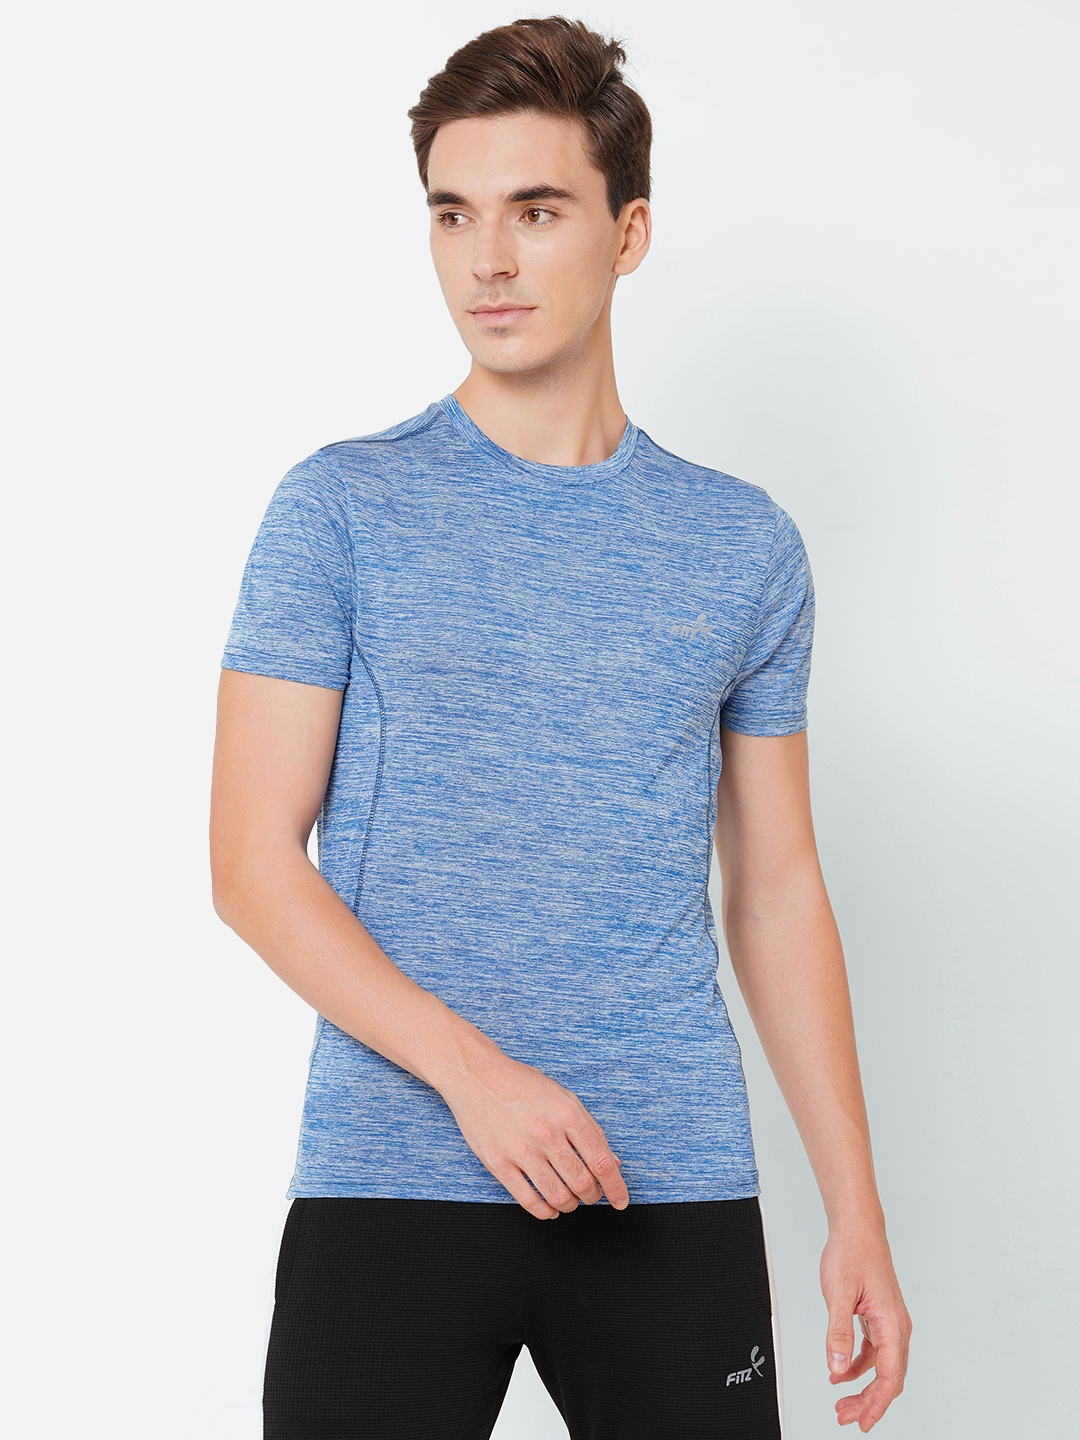 FITZ | Fitz 100% Polyester Regular Fit Short Sleeves Round Neck T-Shirt For Men